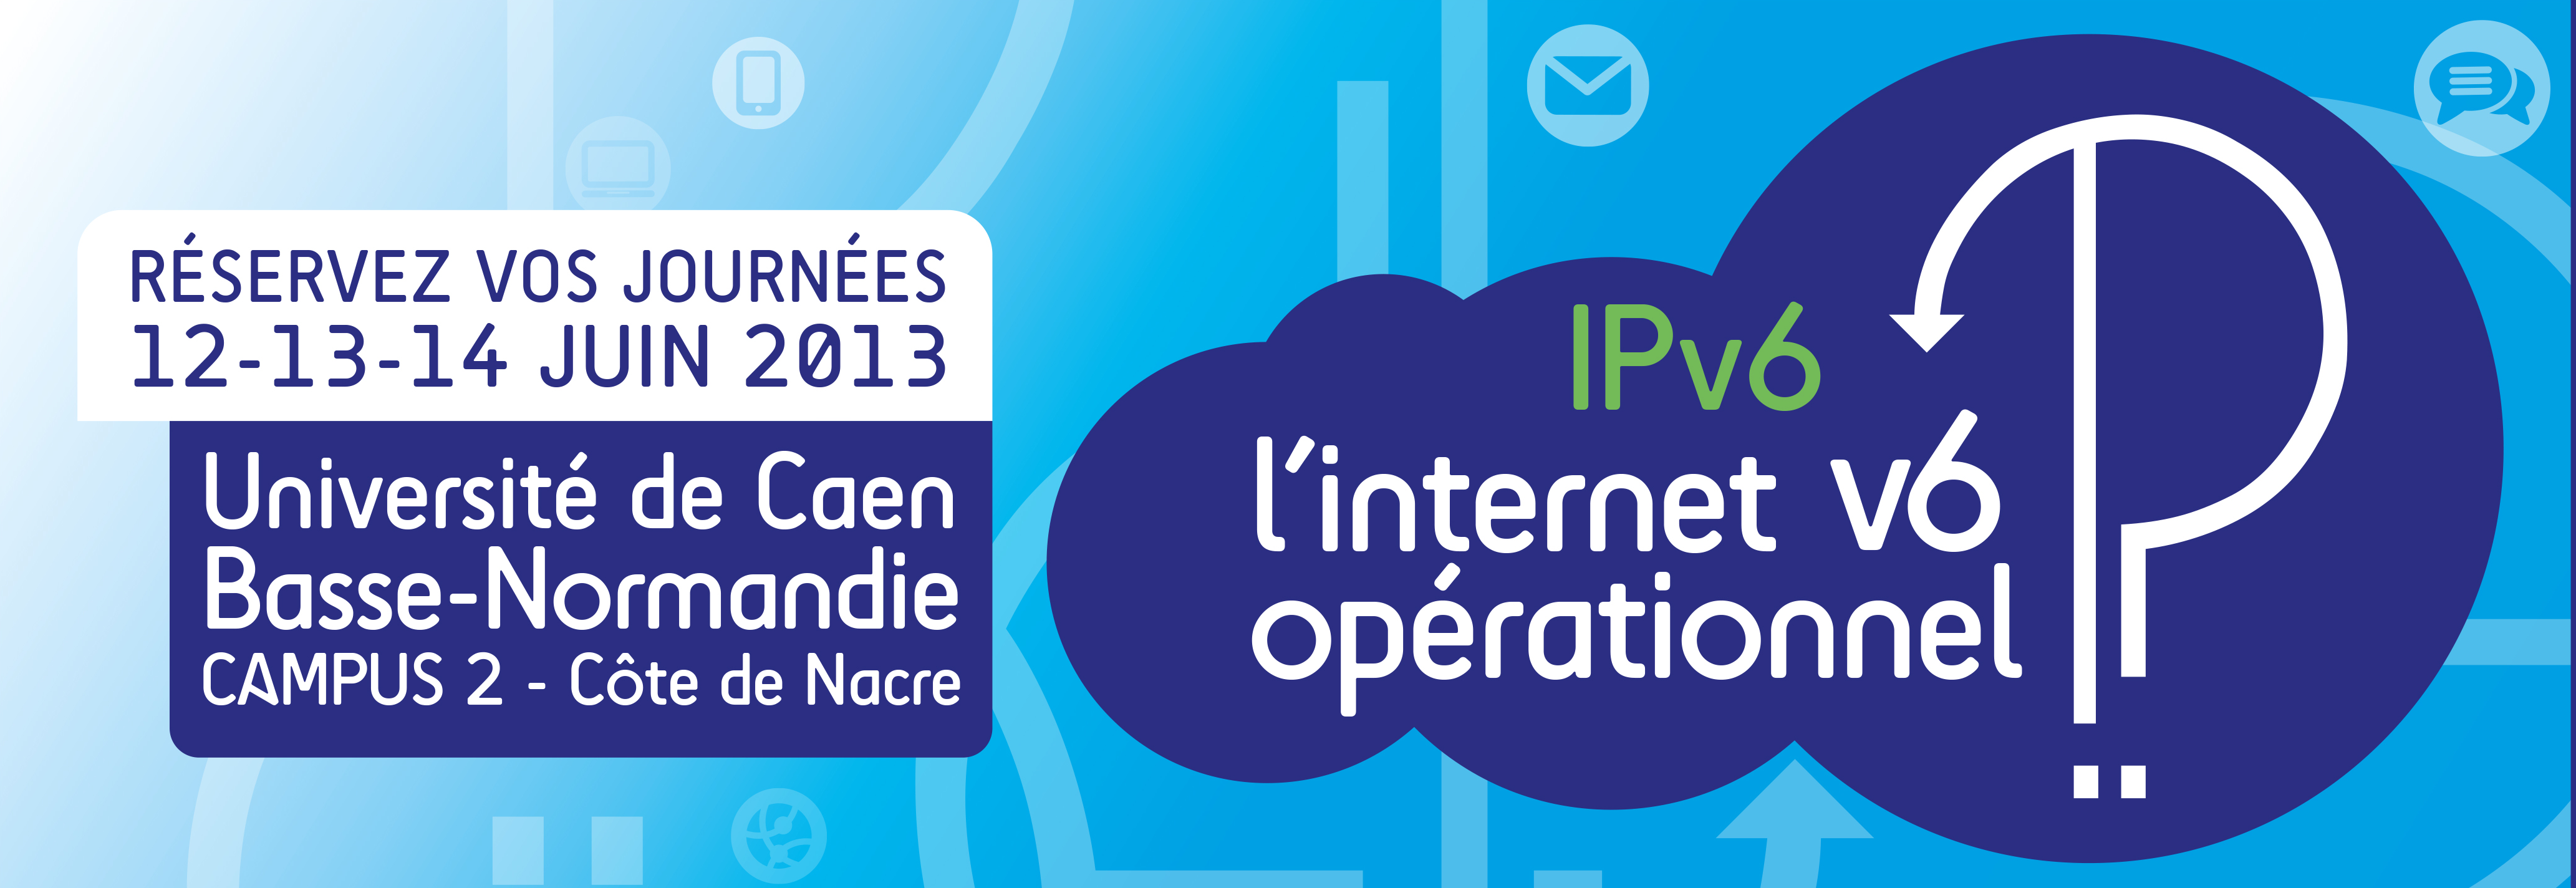 IPV6 opérationel